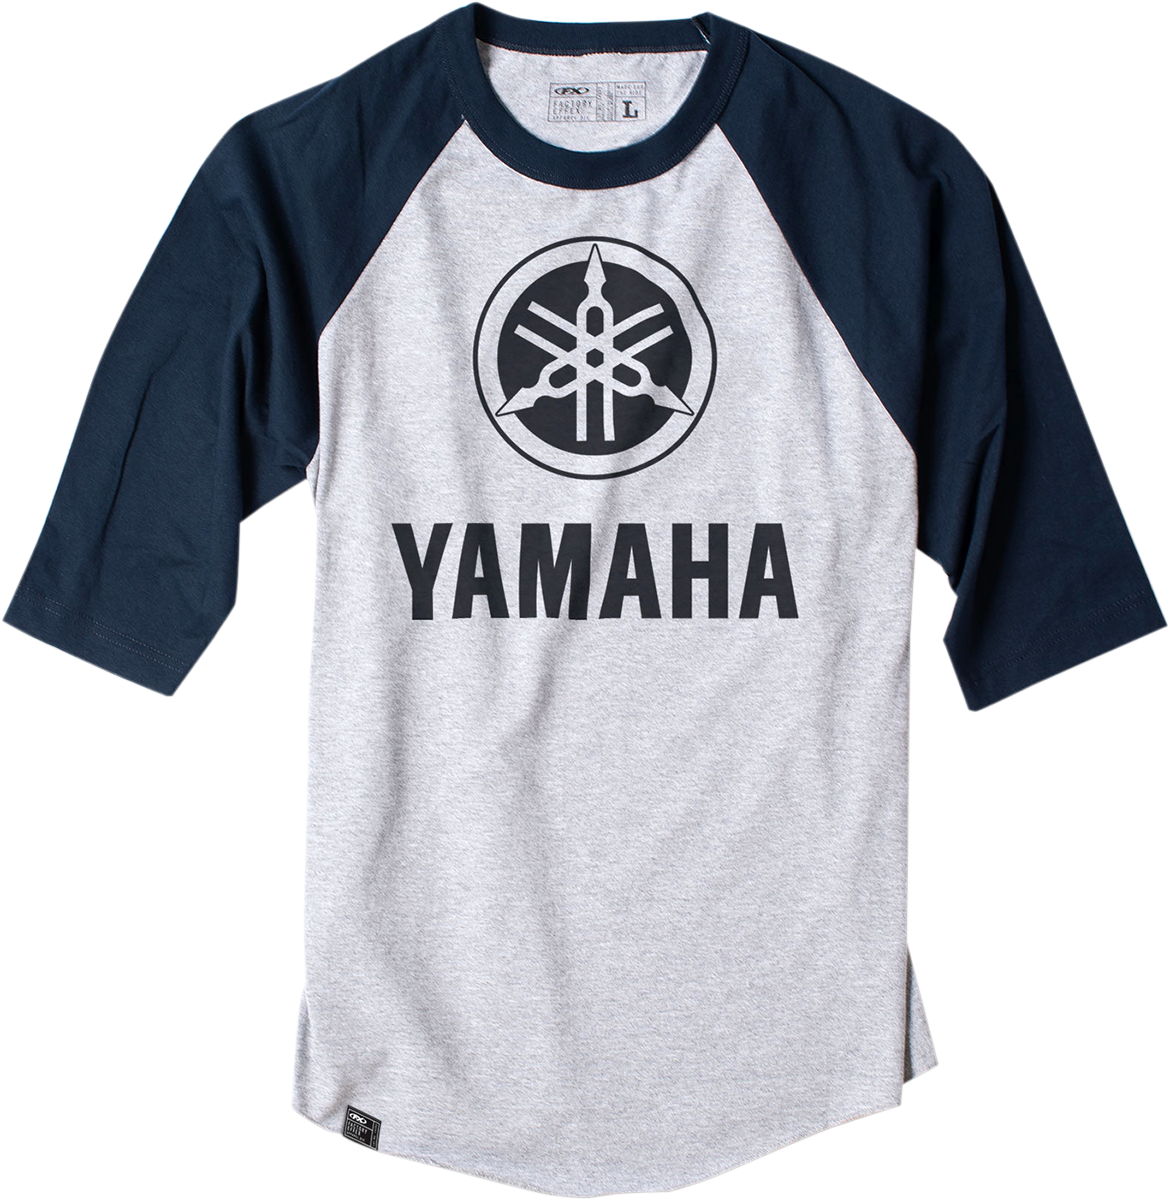 FACTORY EFFEX Yamaha Baseball T-Shirt - Grey/Blue - XL 17-87226